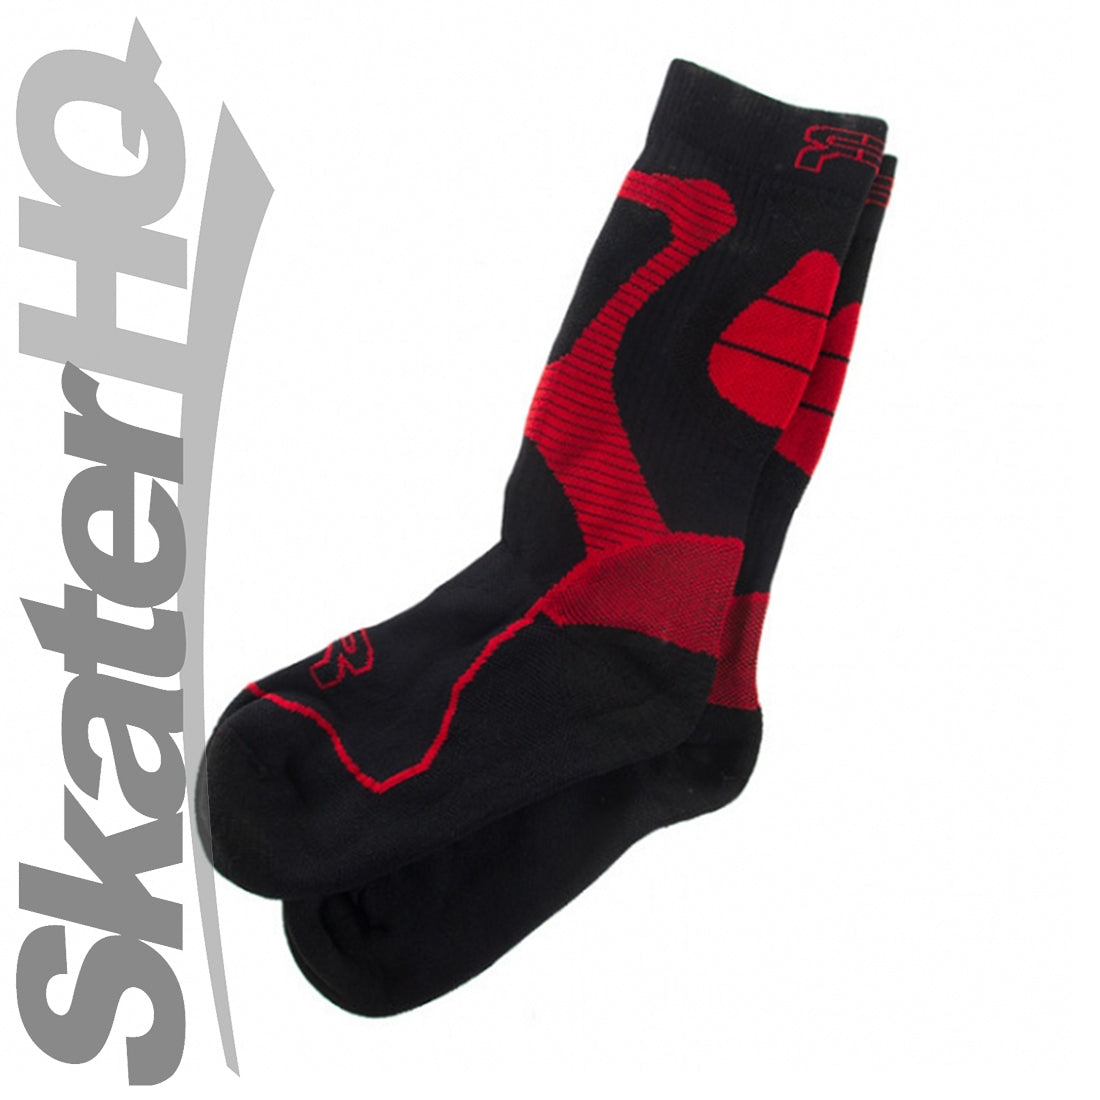 FR Nano Sport Socks Red/Black - Small - EU36-38 Apparel Socks